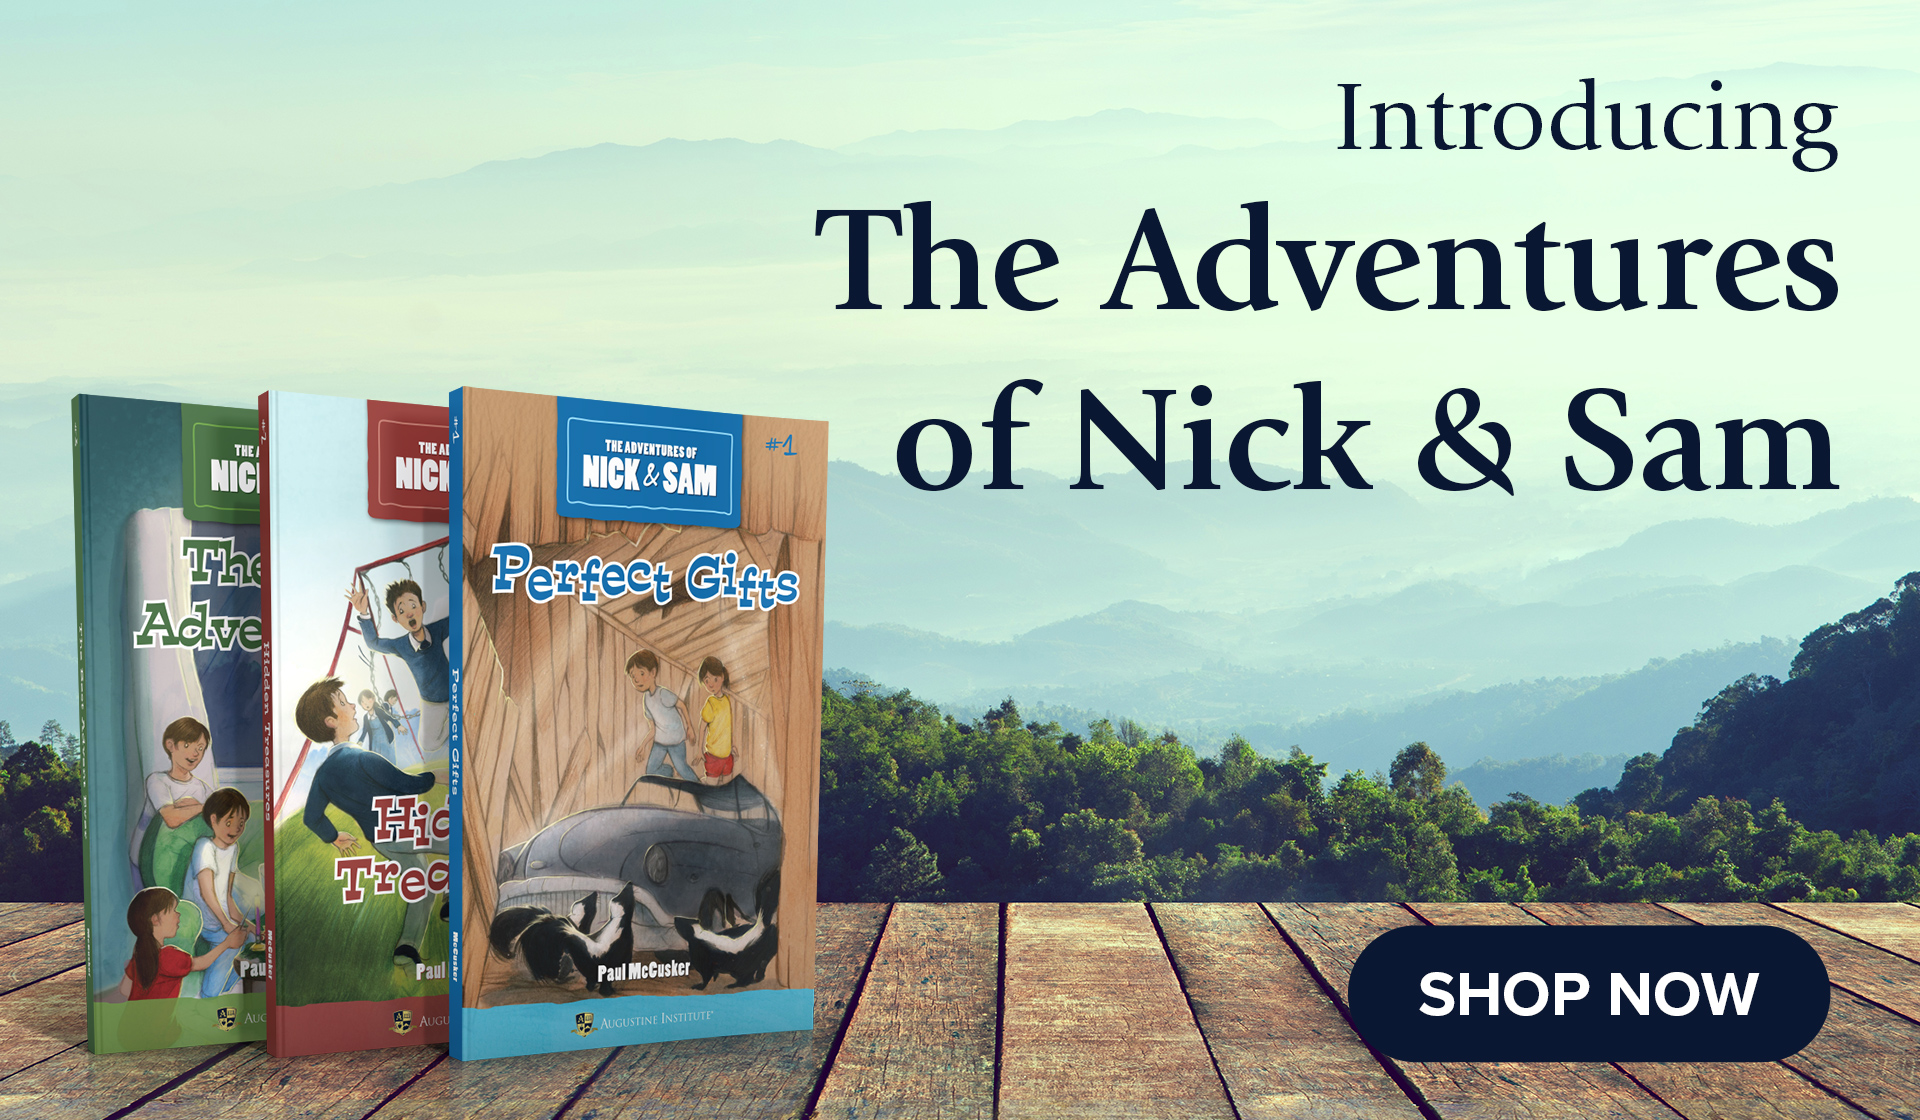 The Adventures of Nick & Sam